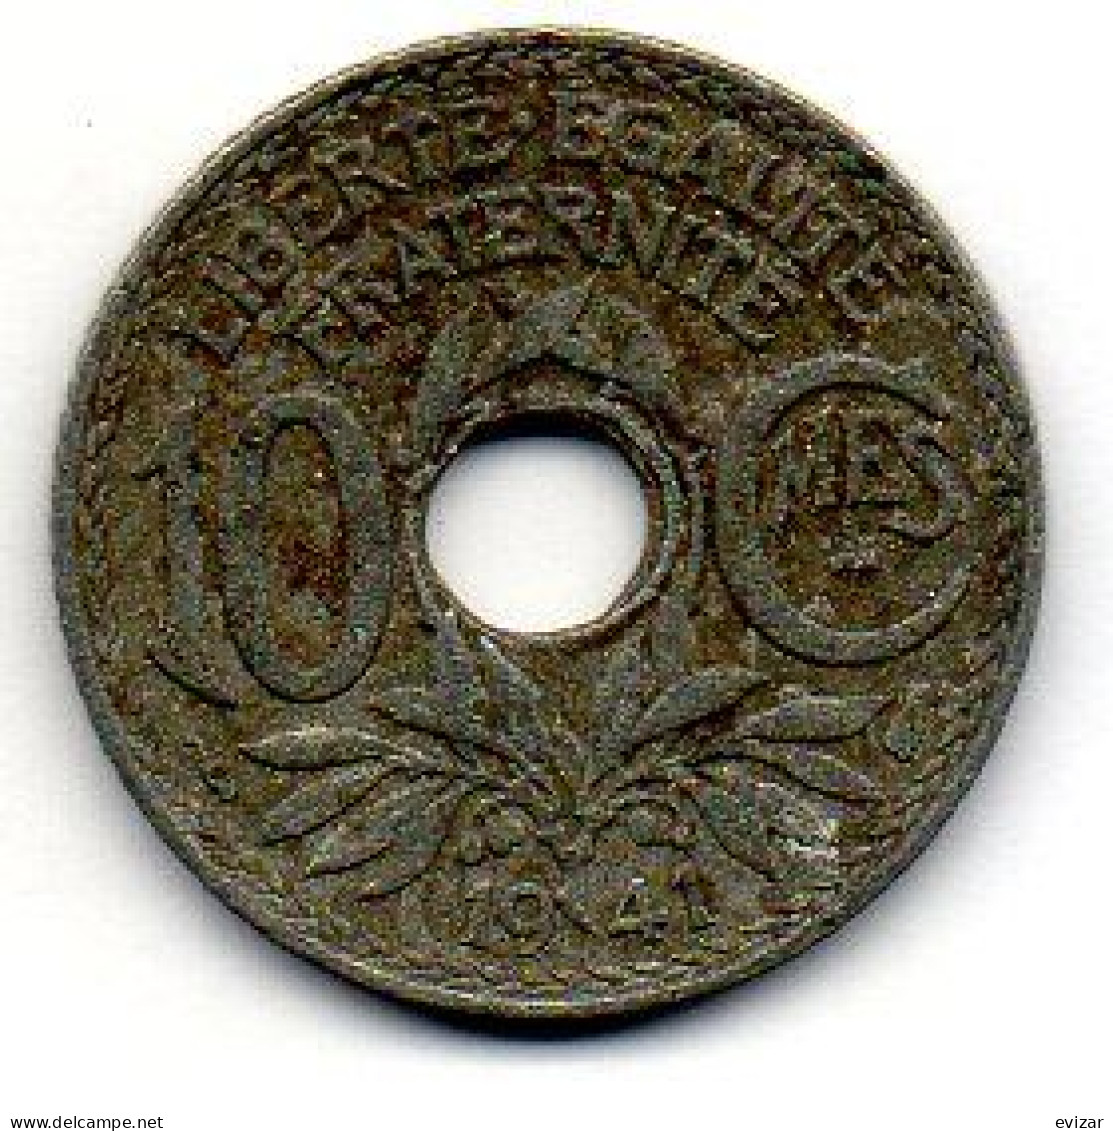 FRANCE, 10 Centimes, Zinc, Year 1941, KM # 896 - 10 Centimes